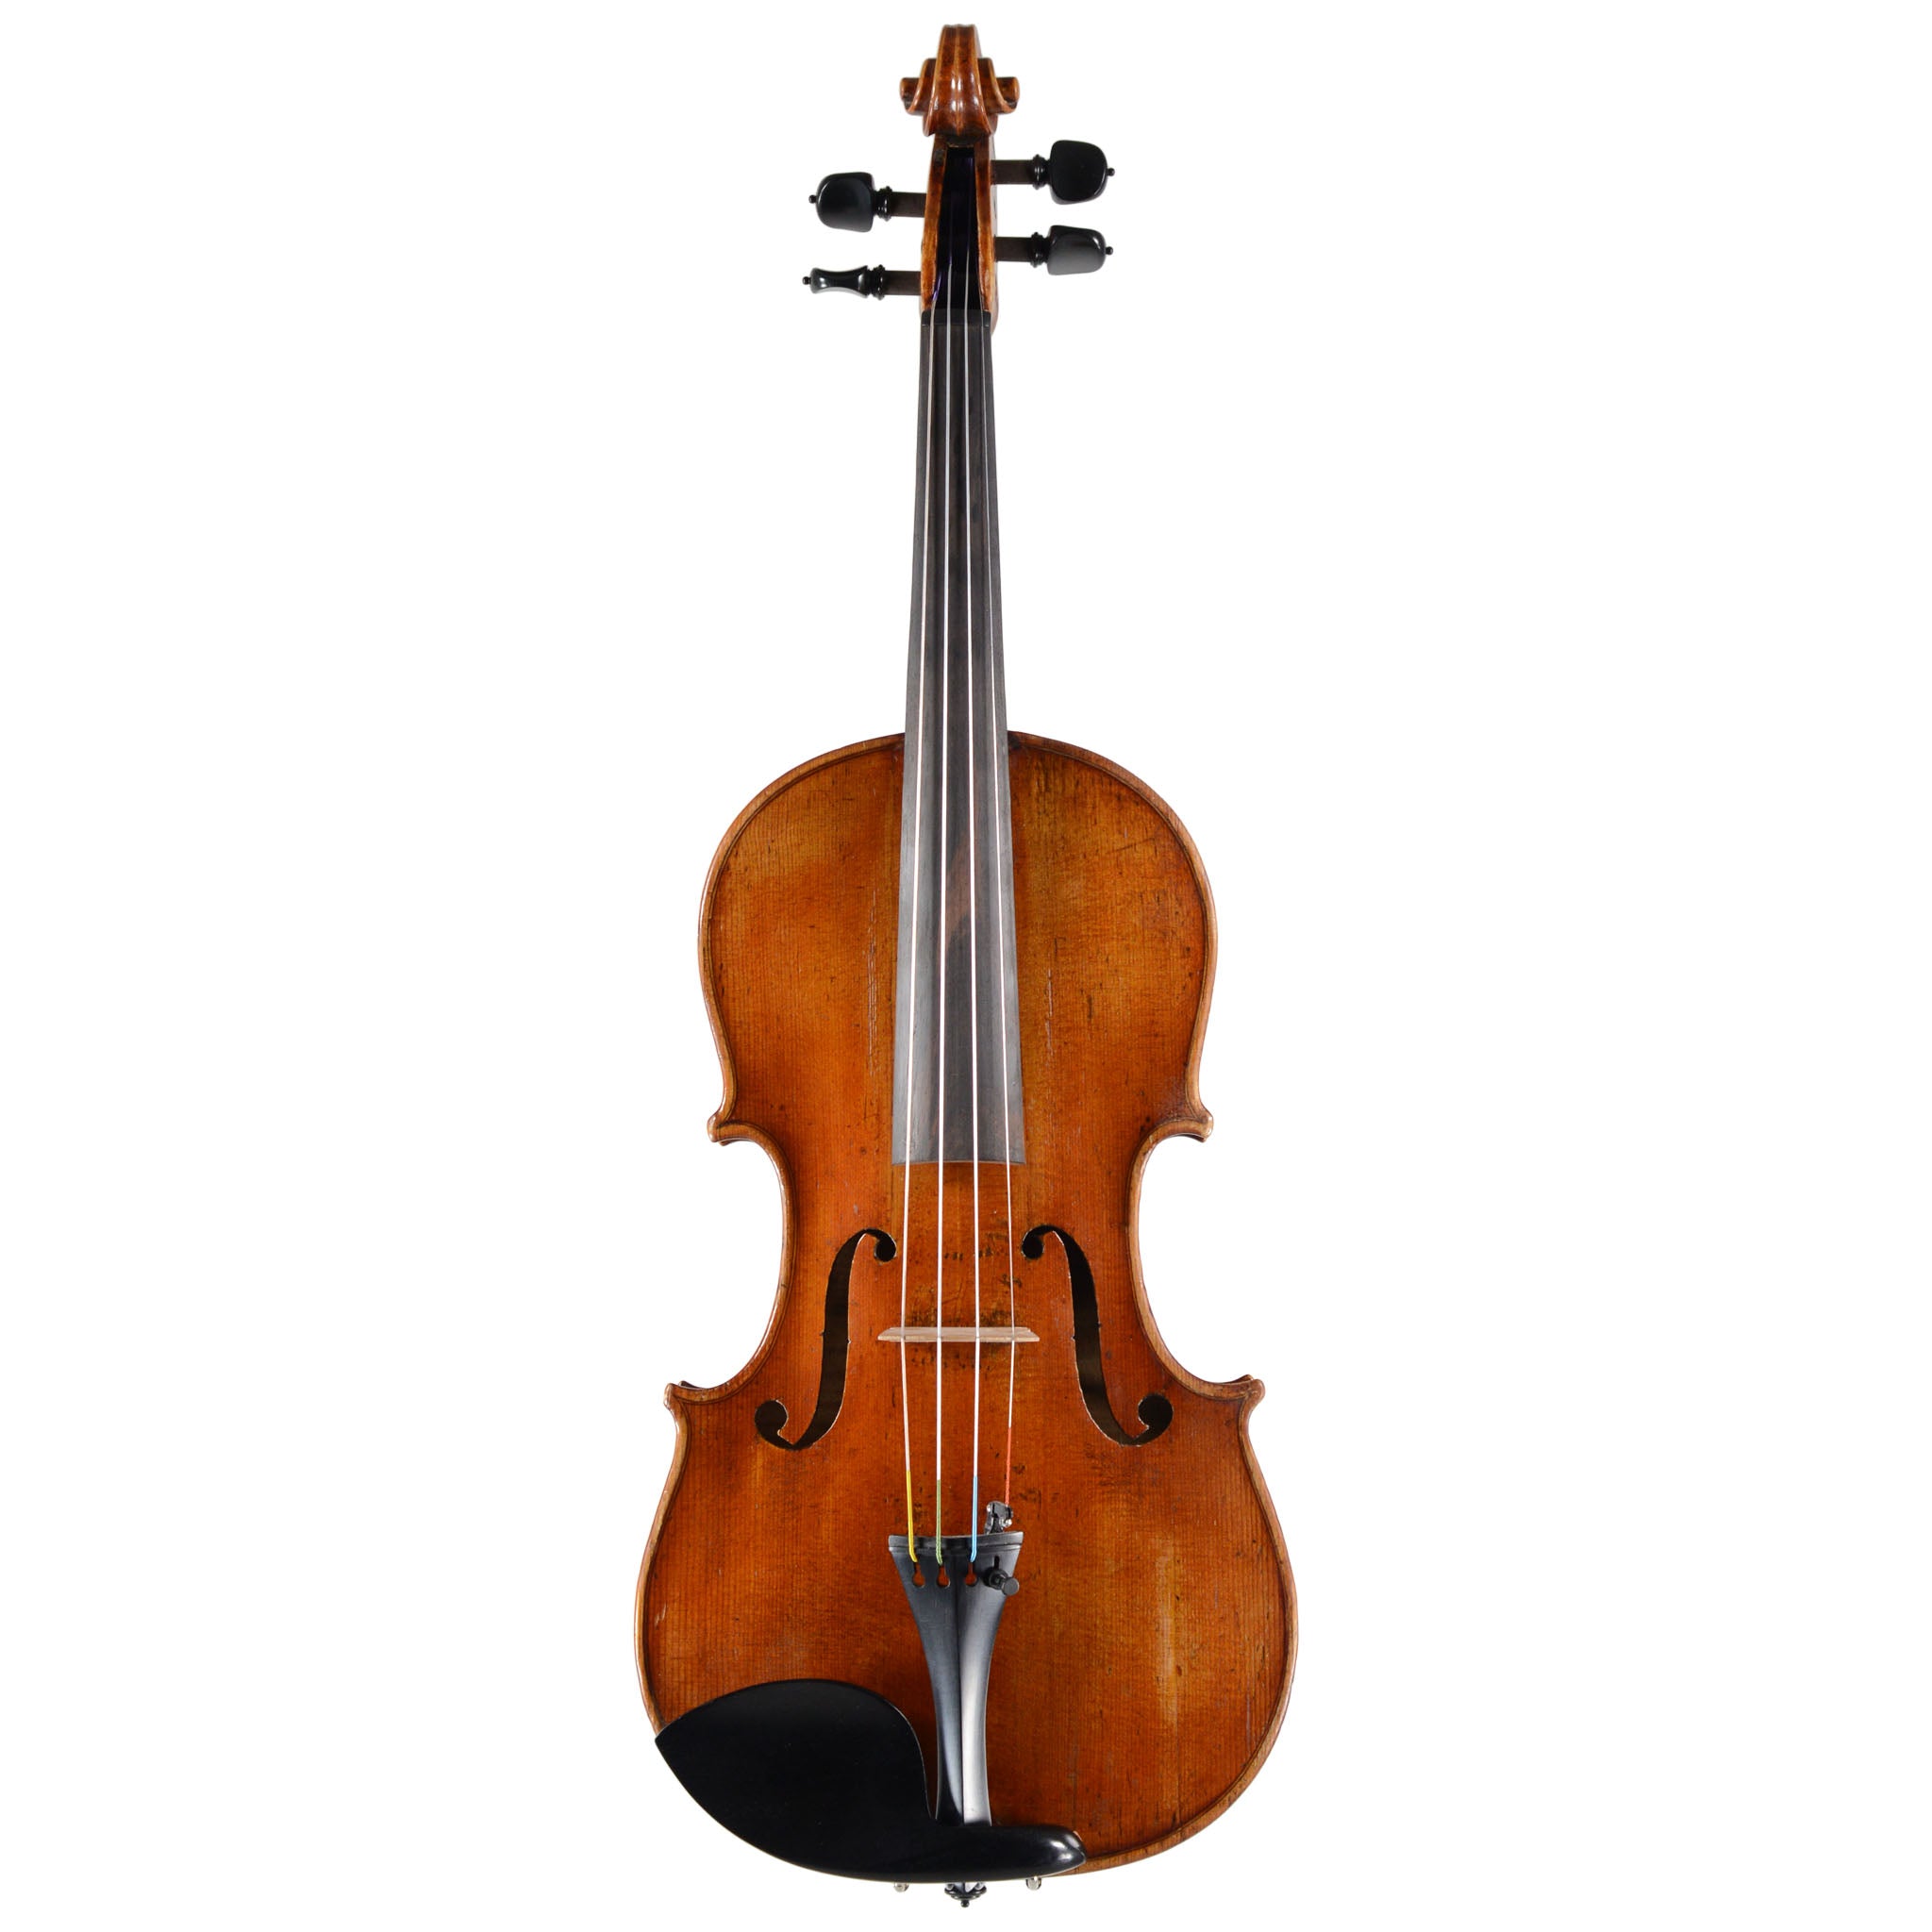 Antique Violin Labeled "Gaglianus"